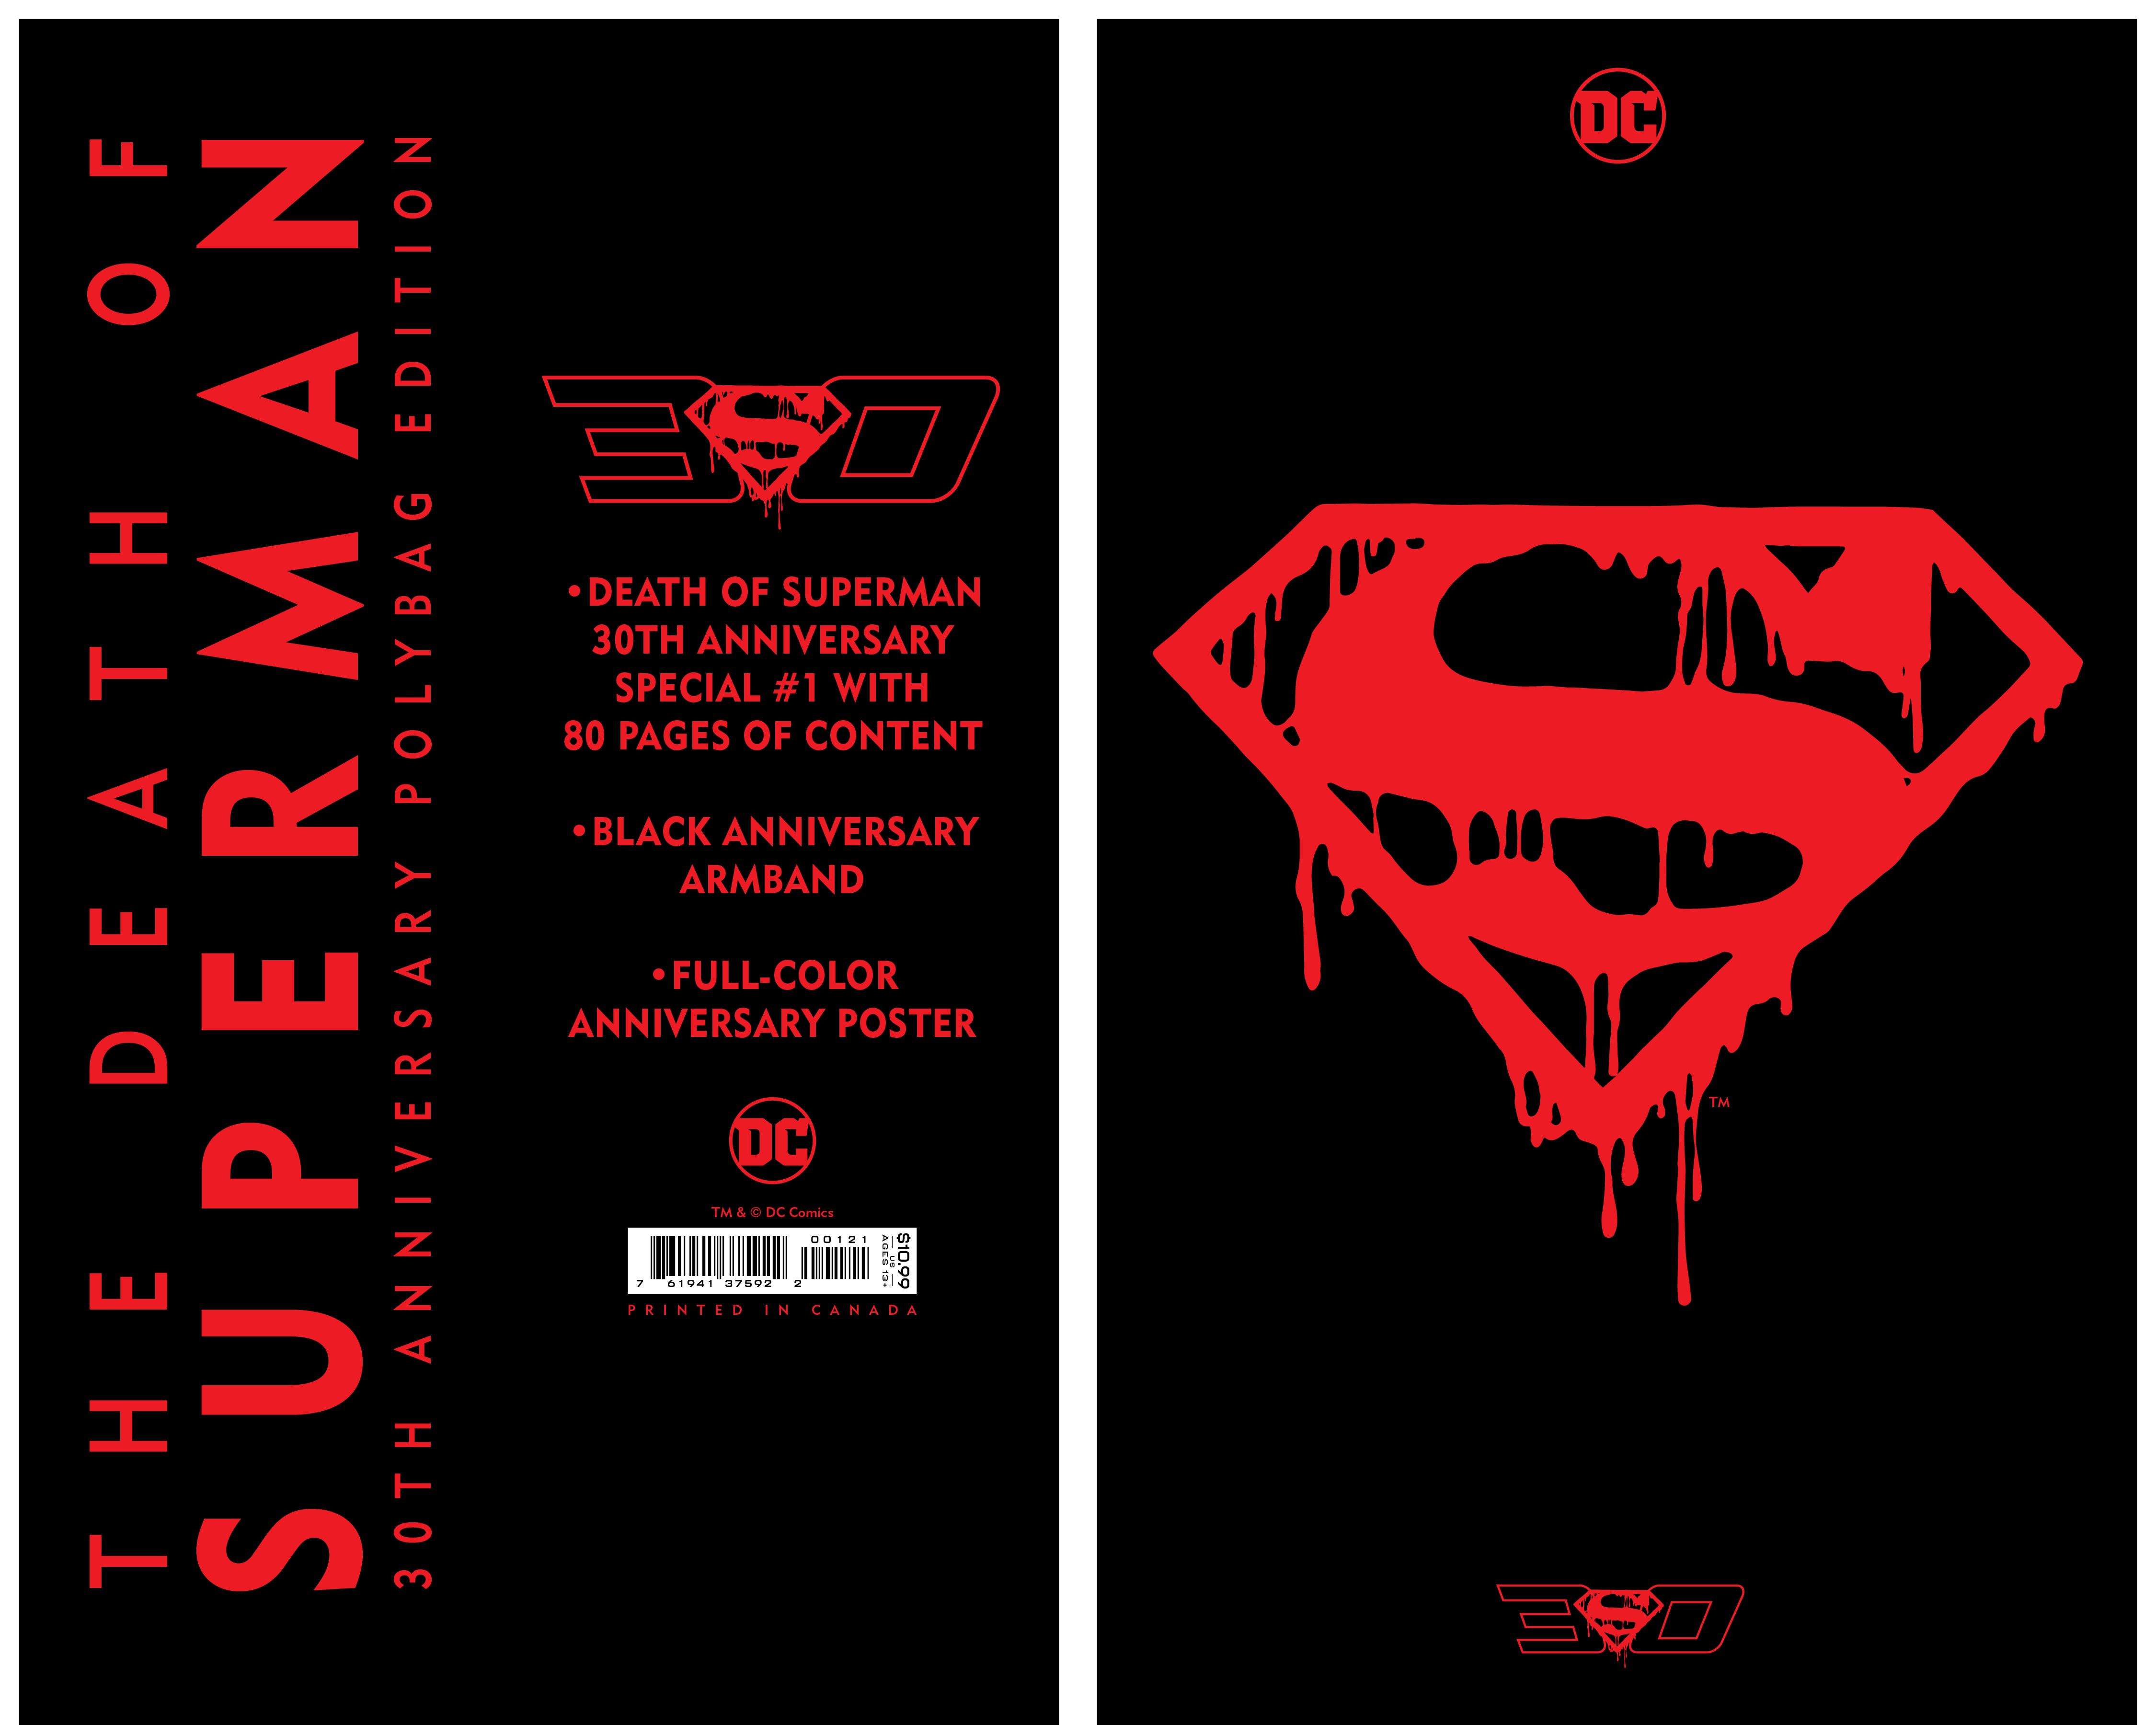 DC Announces New Death of Superman Special With Original Creative Teams